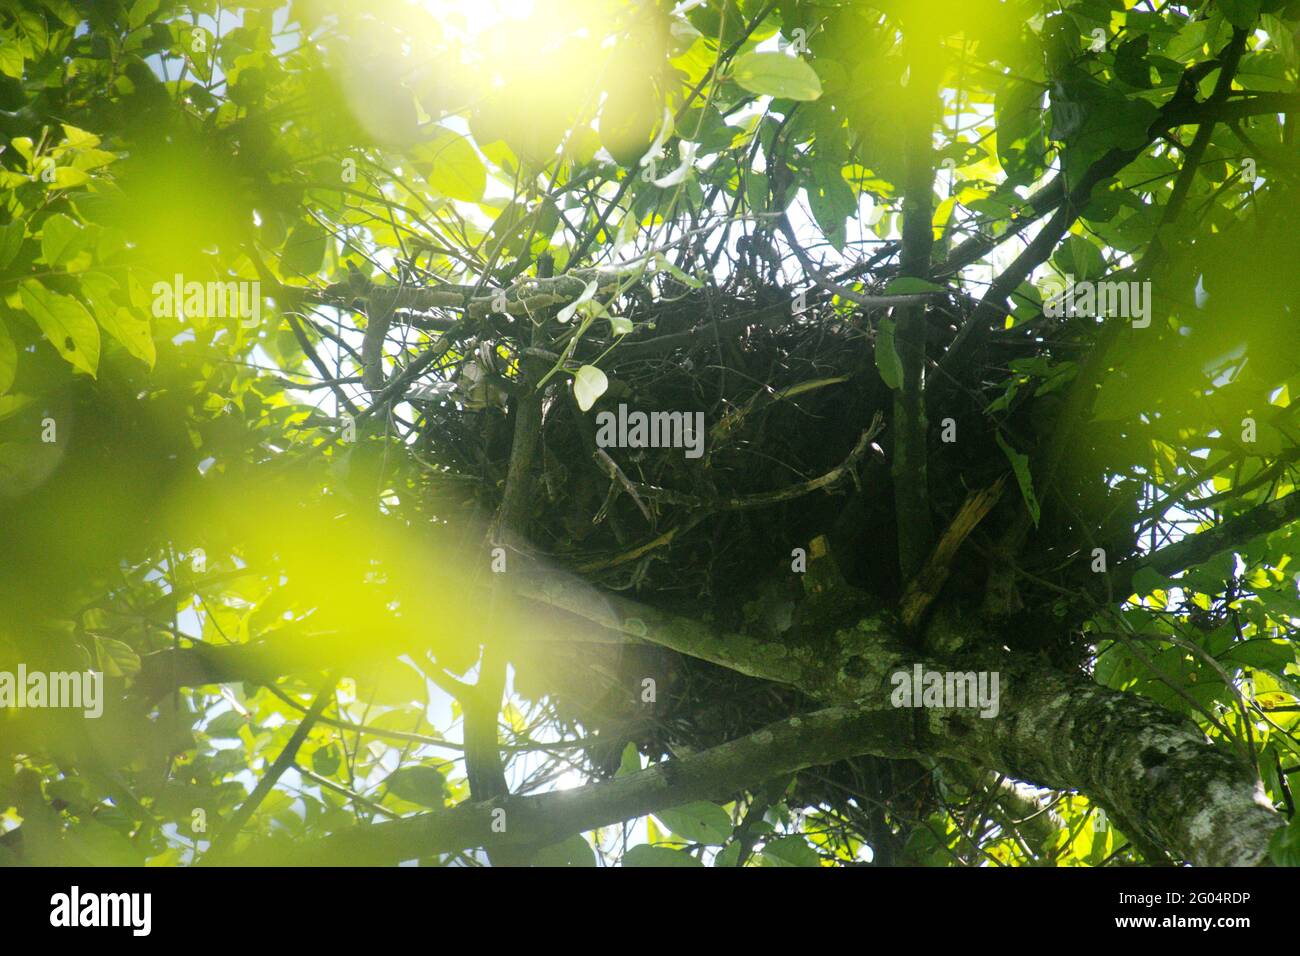 A nest belong to wild orangutan in Kutai National Park, Rast Kalimantan, Indonesia. Kutai National Park is considered as one of the last natural habitats where wild orangutan can be observed. Stock Photo